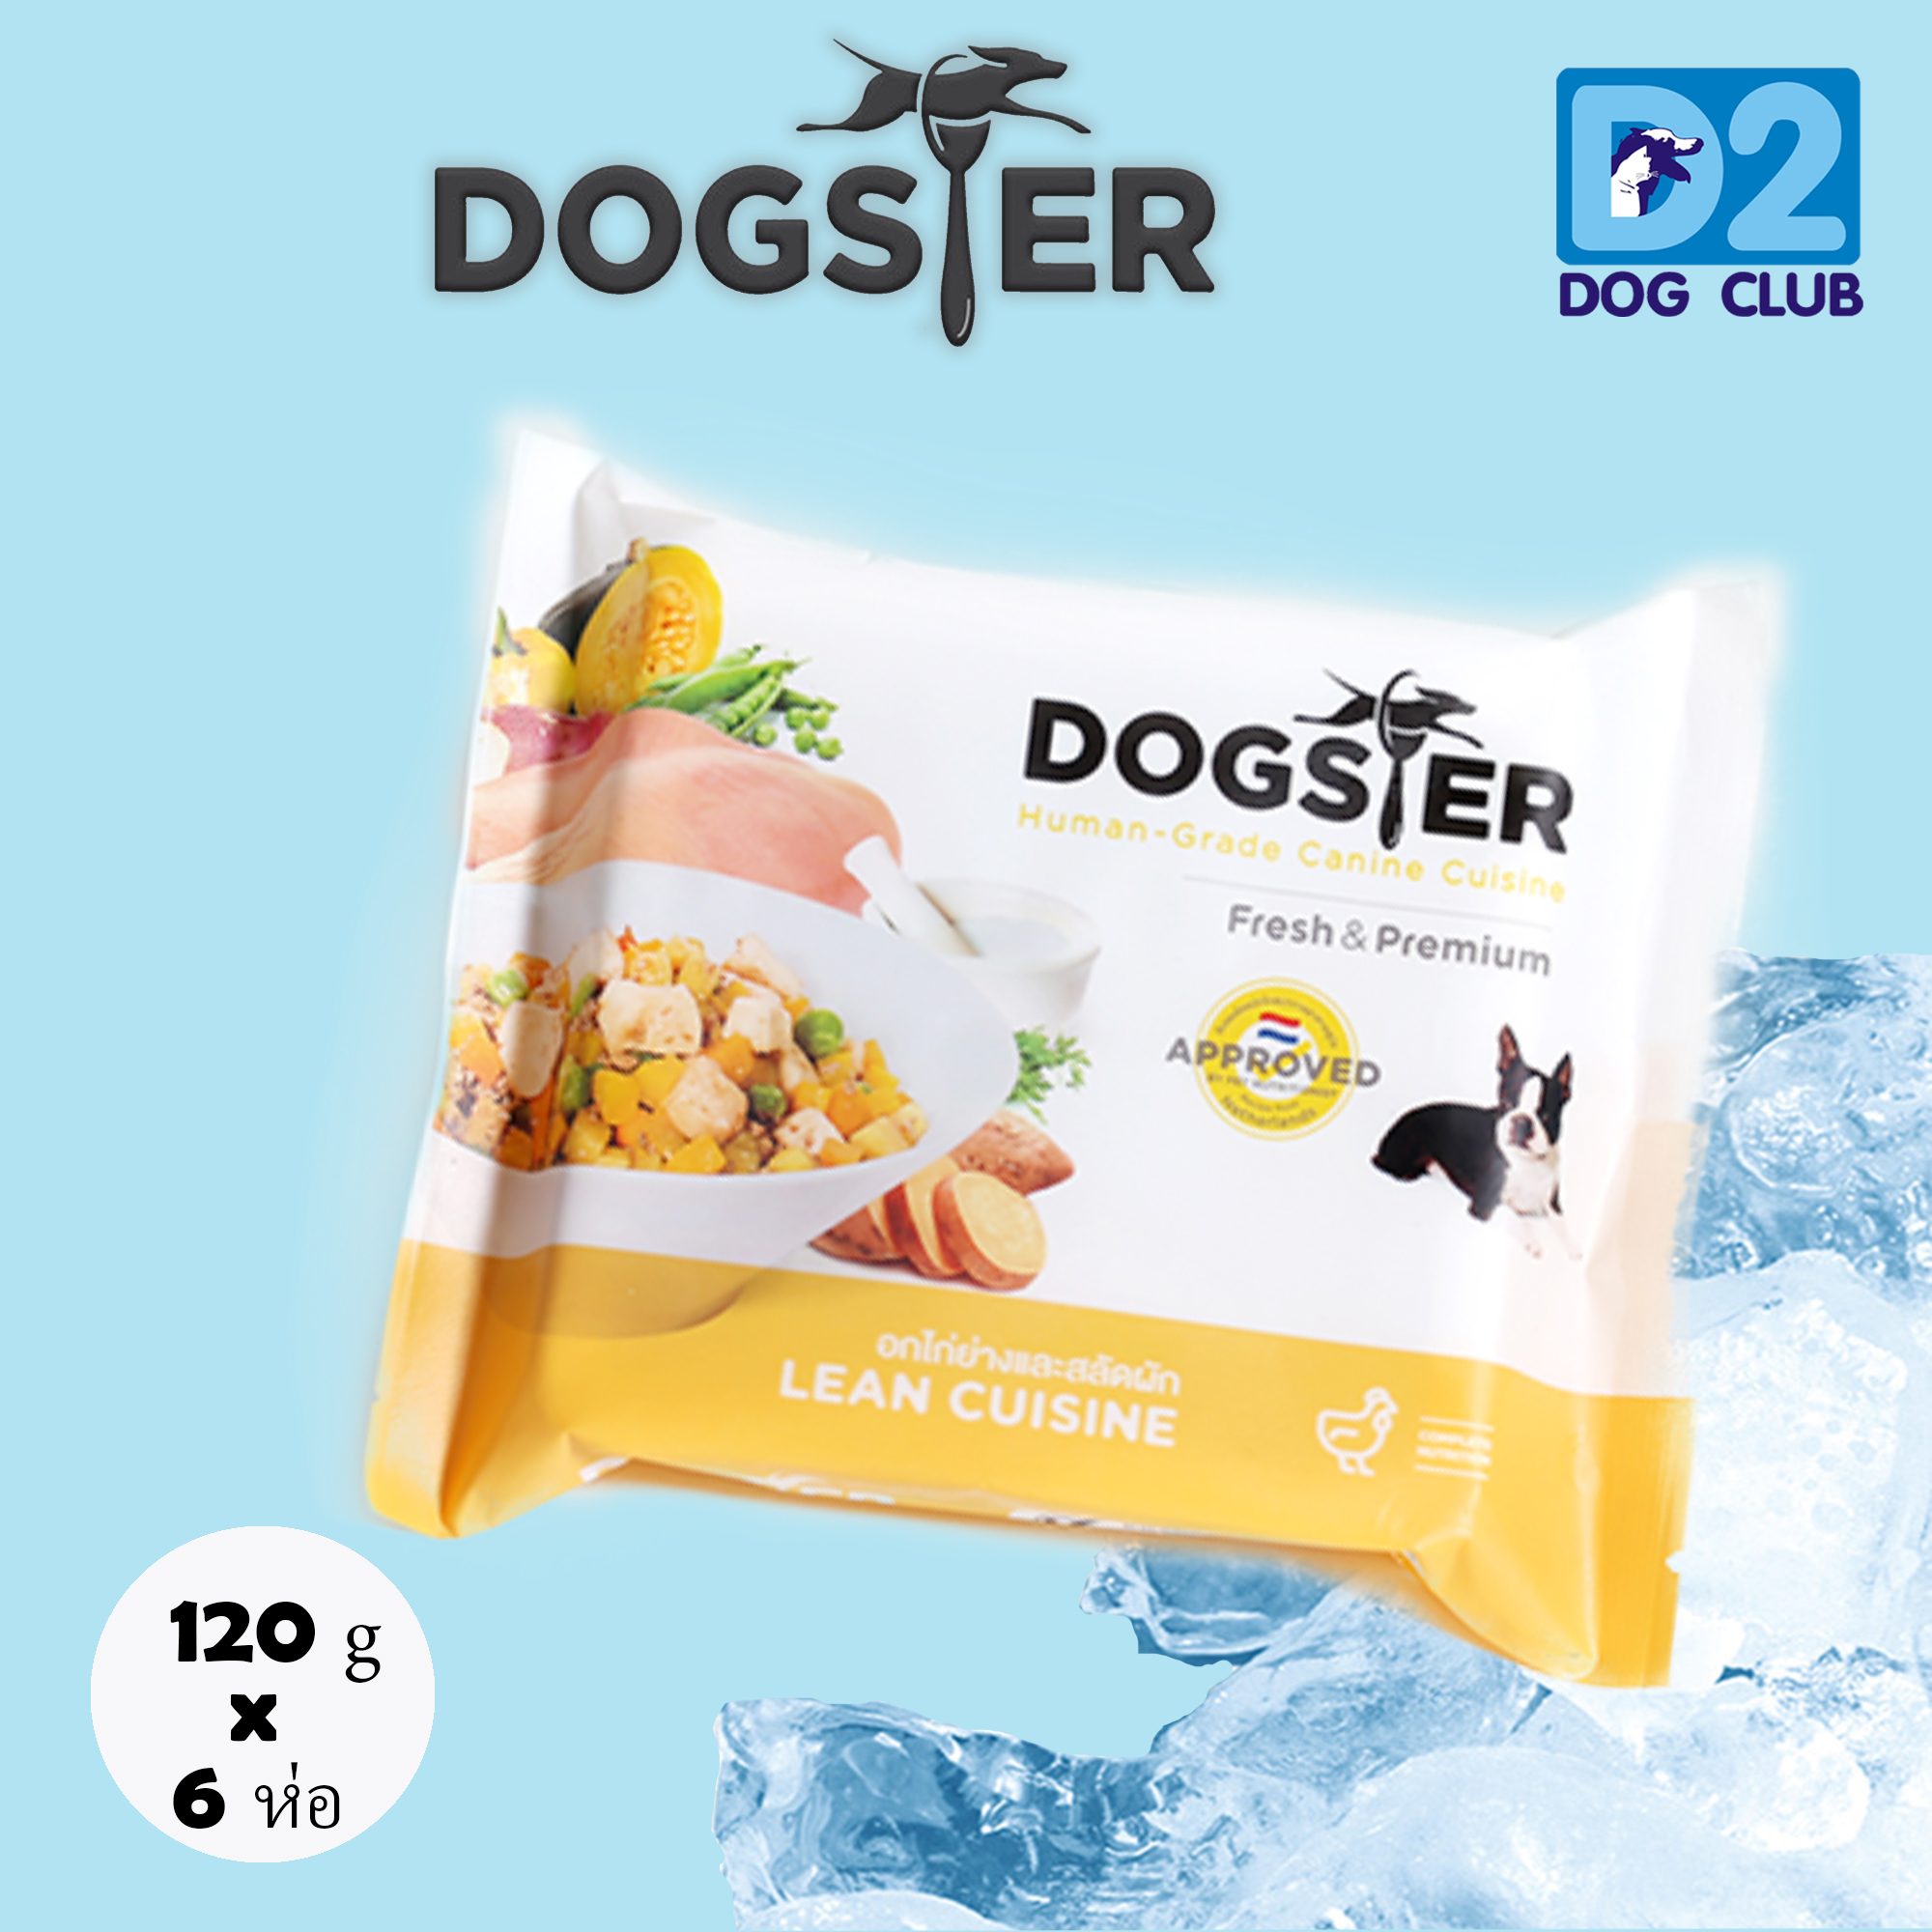 Dogster Dog Food Frozen chicken อาหารสุนัข อาหารสุนัข แช่แข็ง อกไก่ย่างและสลัดผัก 120g X 6 ห่อ